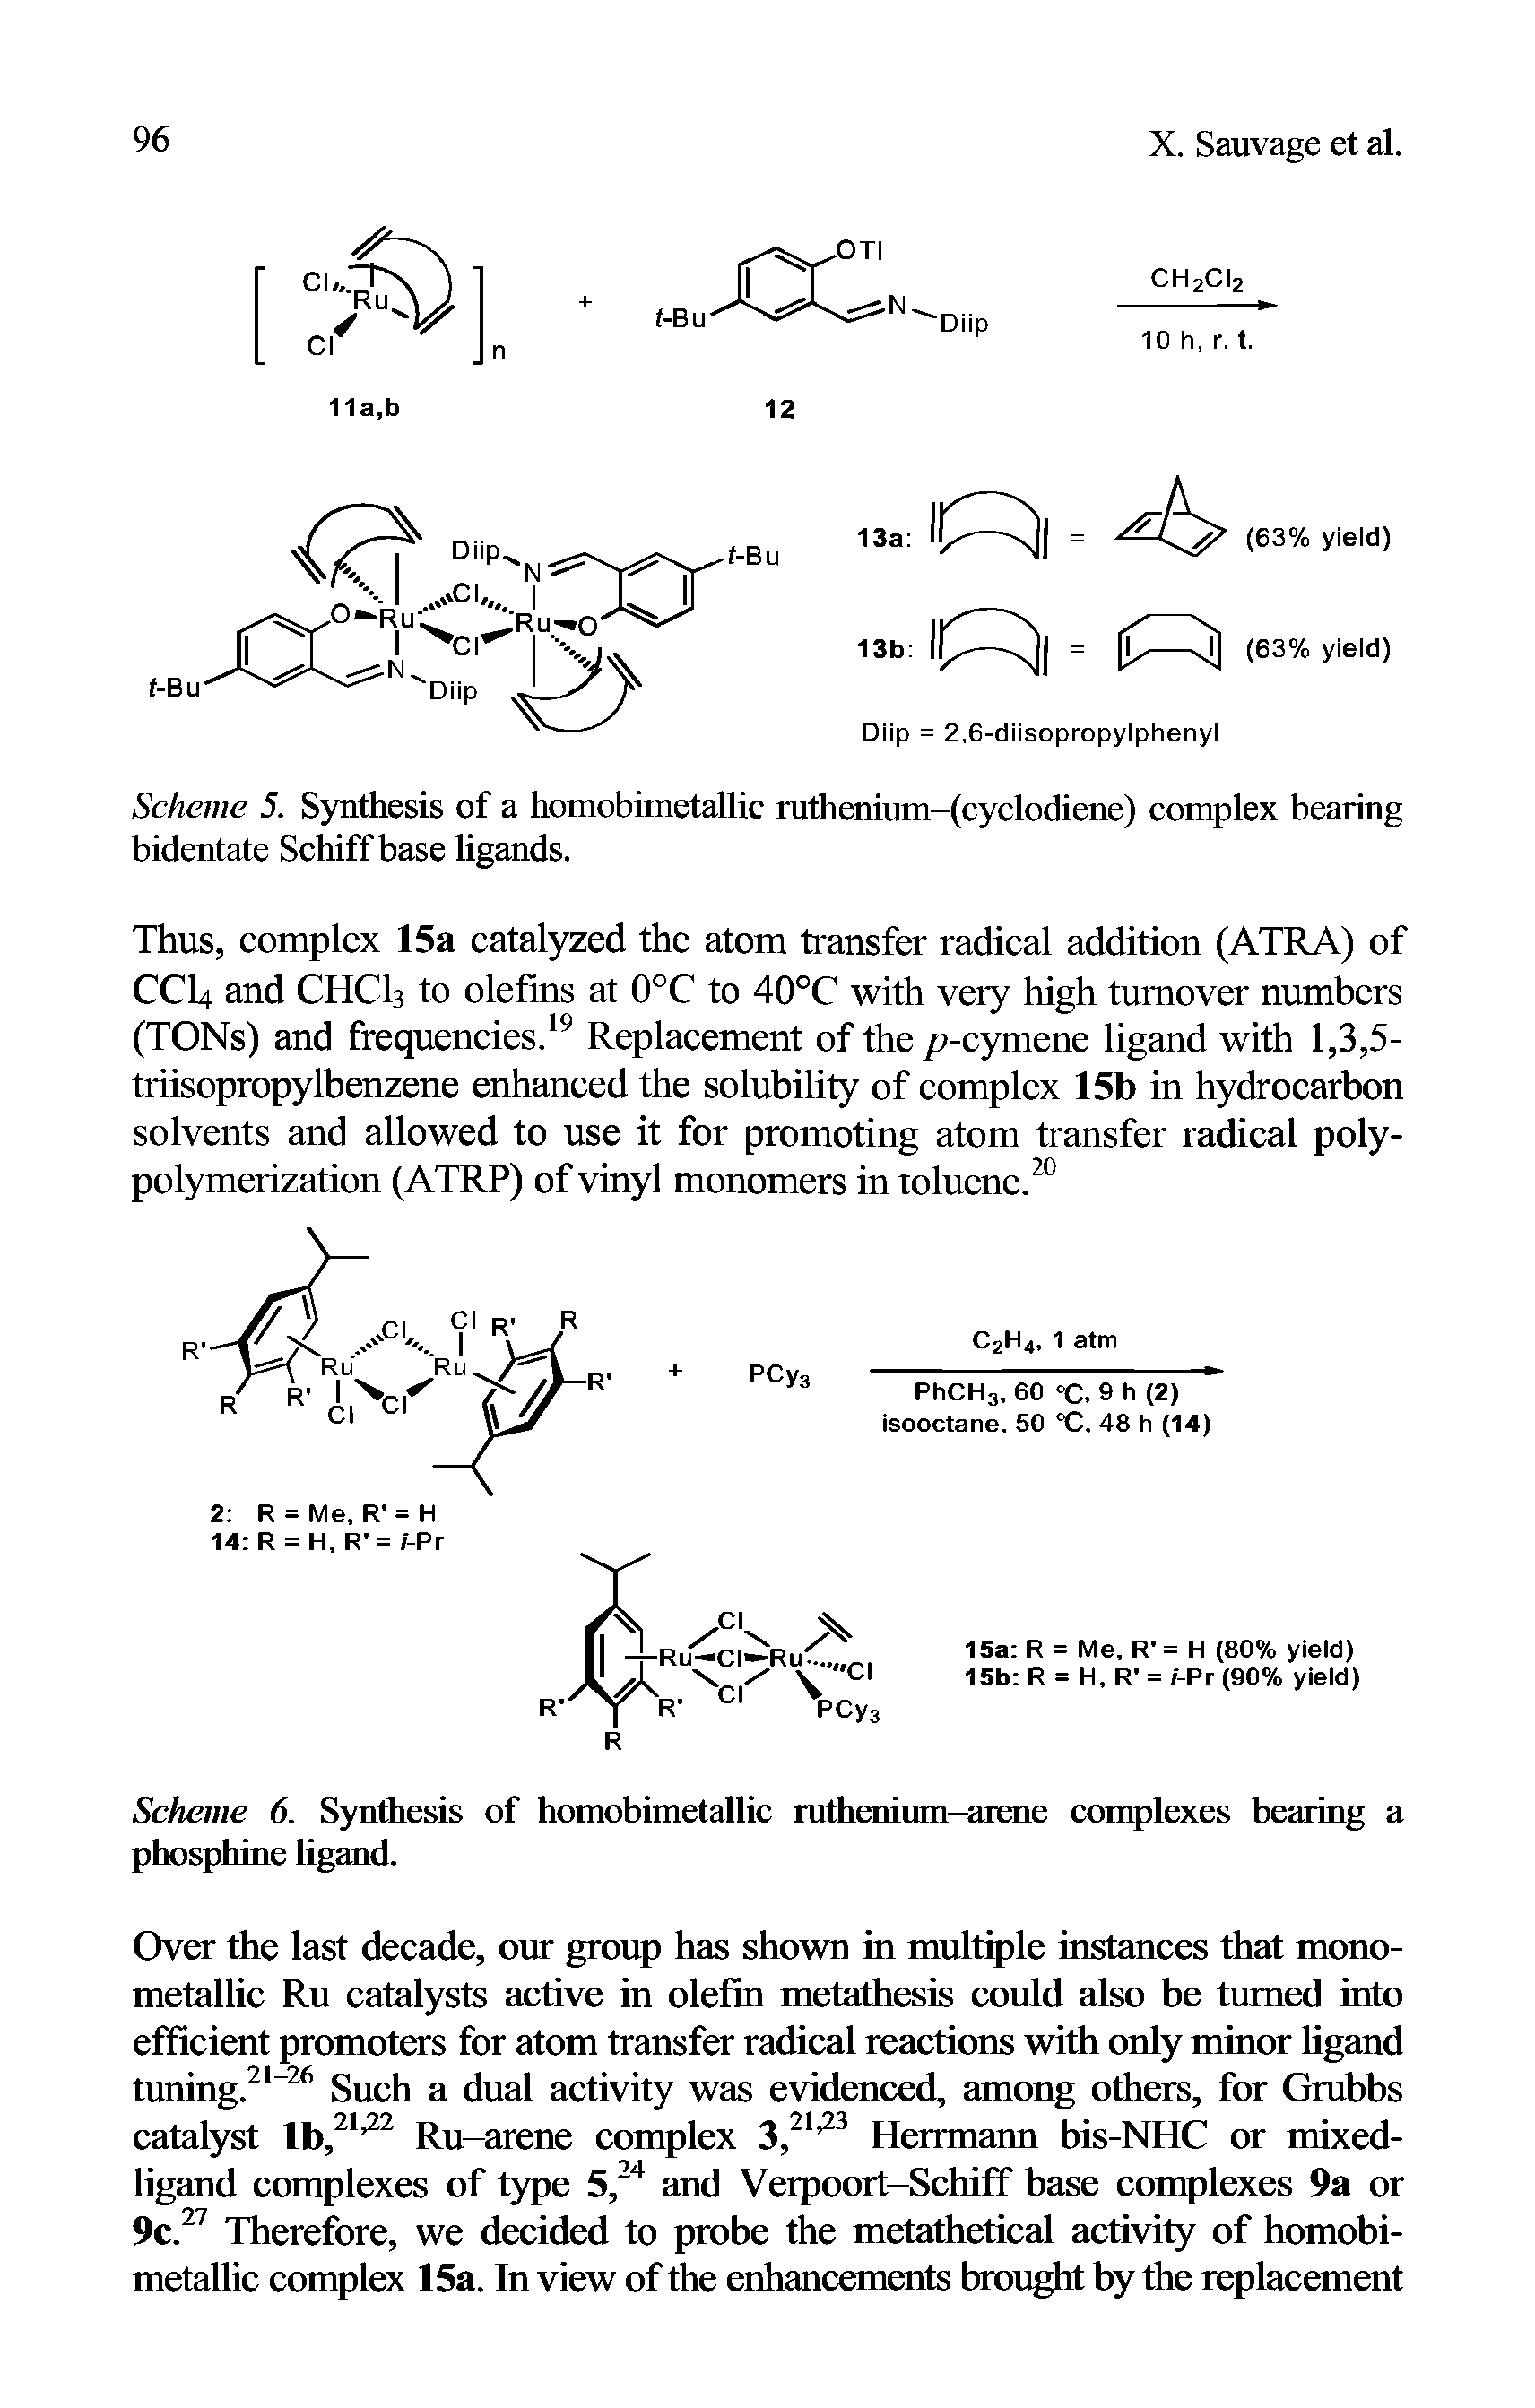 Scheme 5. Synthesis of a homobimetallic ruthenium-(cyclodiene) complex bearing bidentate Schiff base ligands.